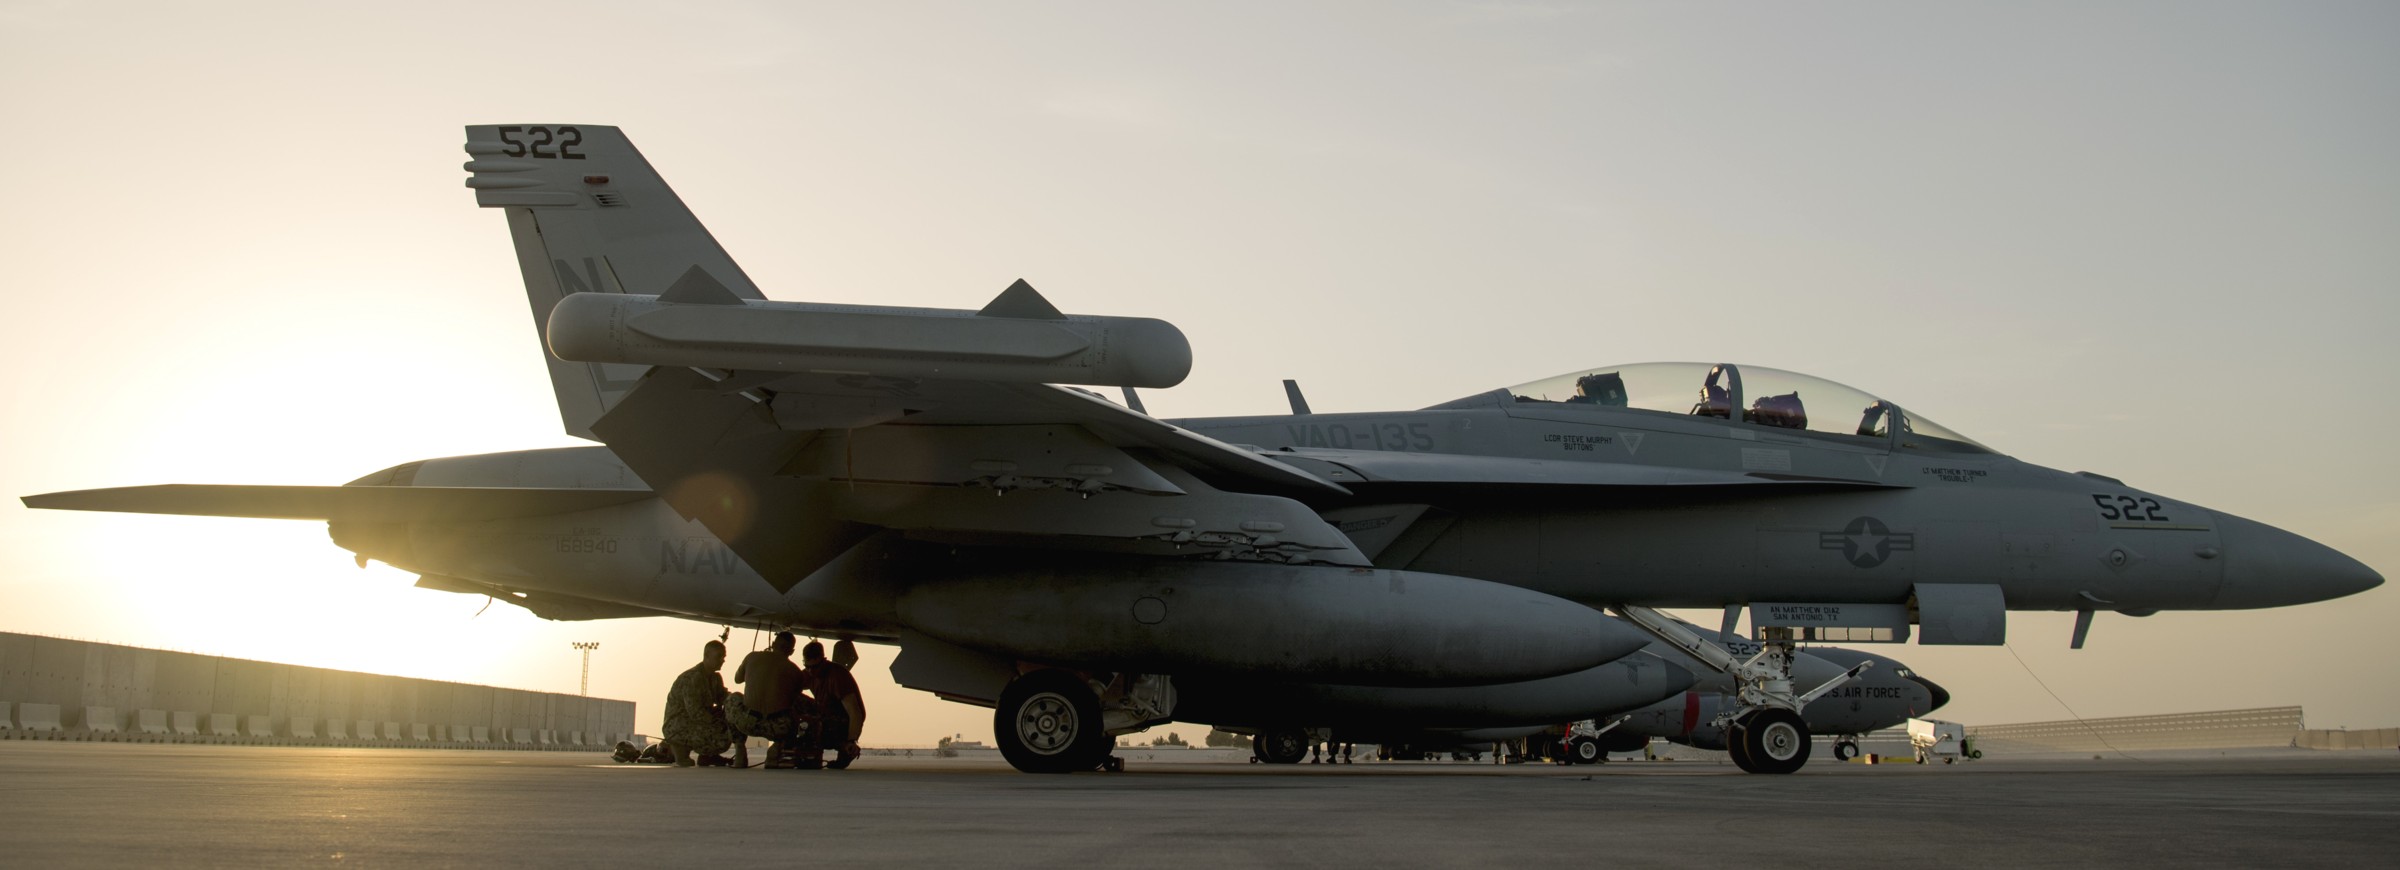 vaq-135 black ravens electronic attack squadron vaqron us navy boeing ea-18g growler al udeid air base qatar 120